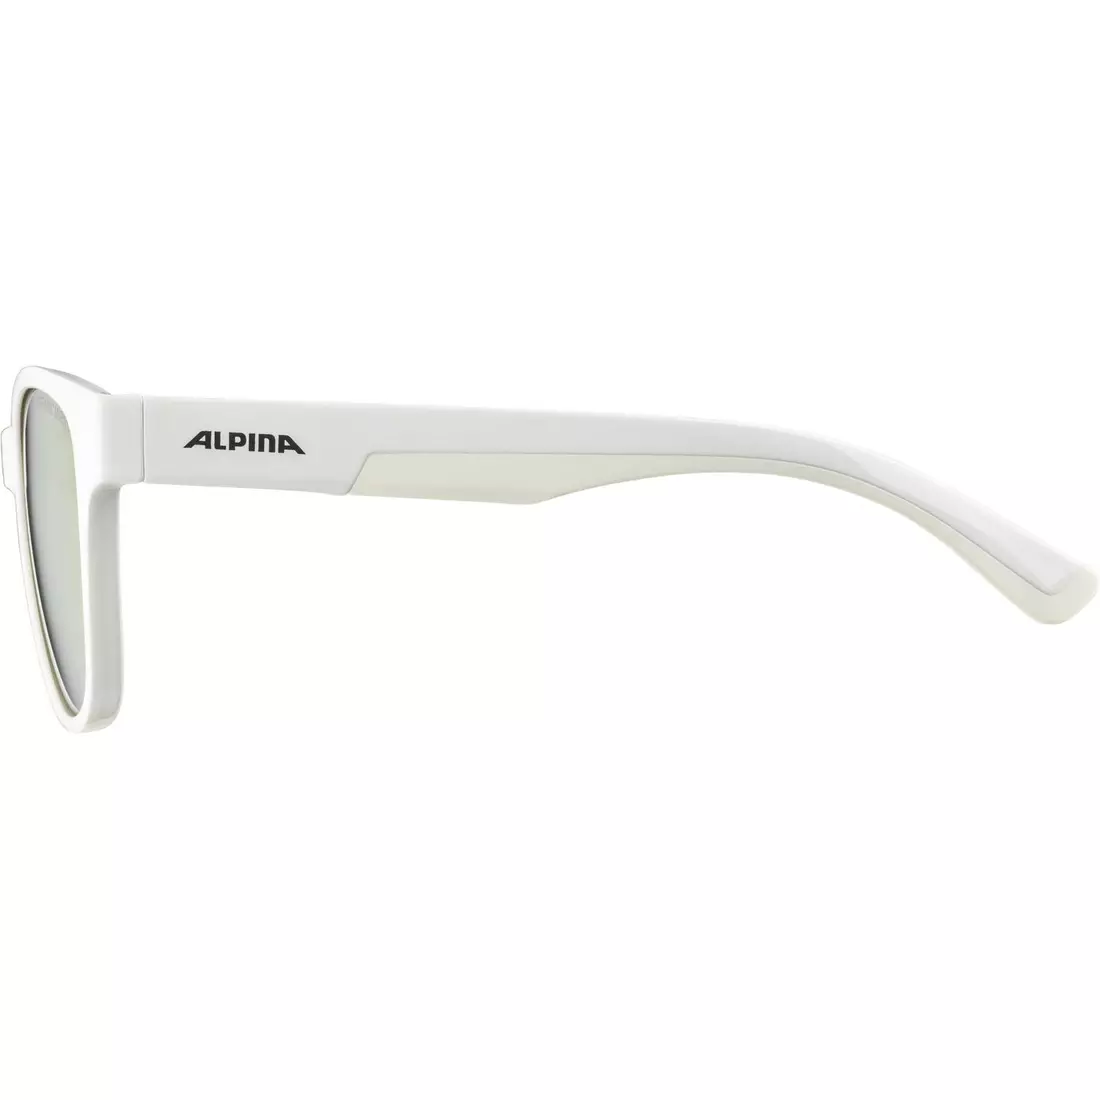 ALPINA FLEXXY COOL KIDS II children's cycling/sports glasses, white gloss